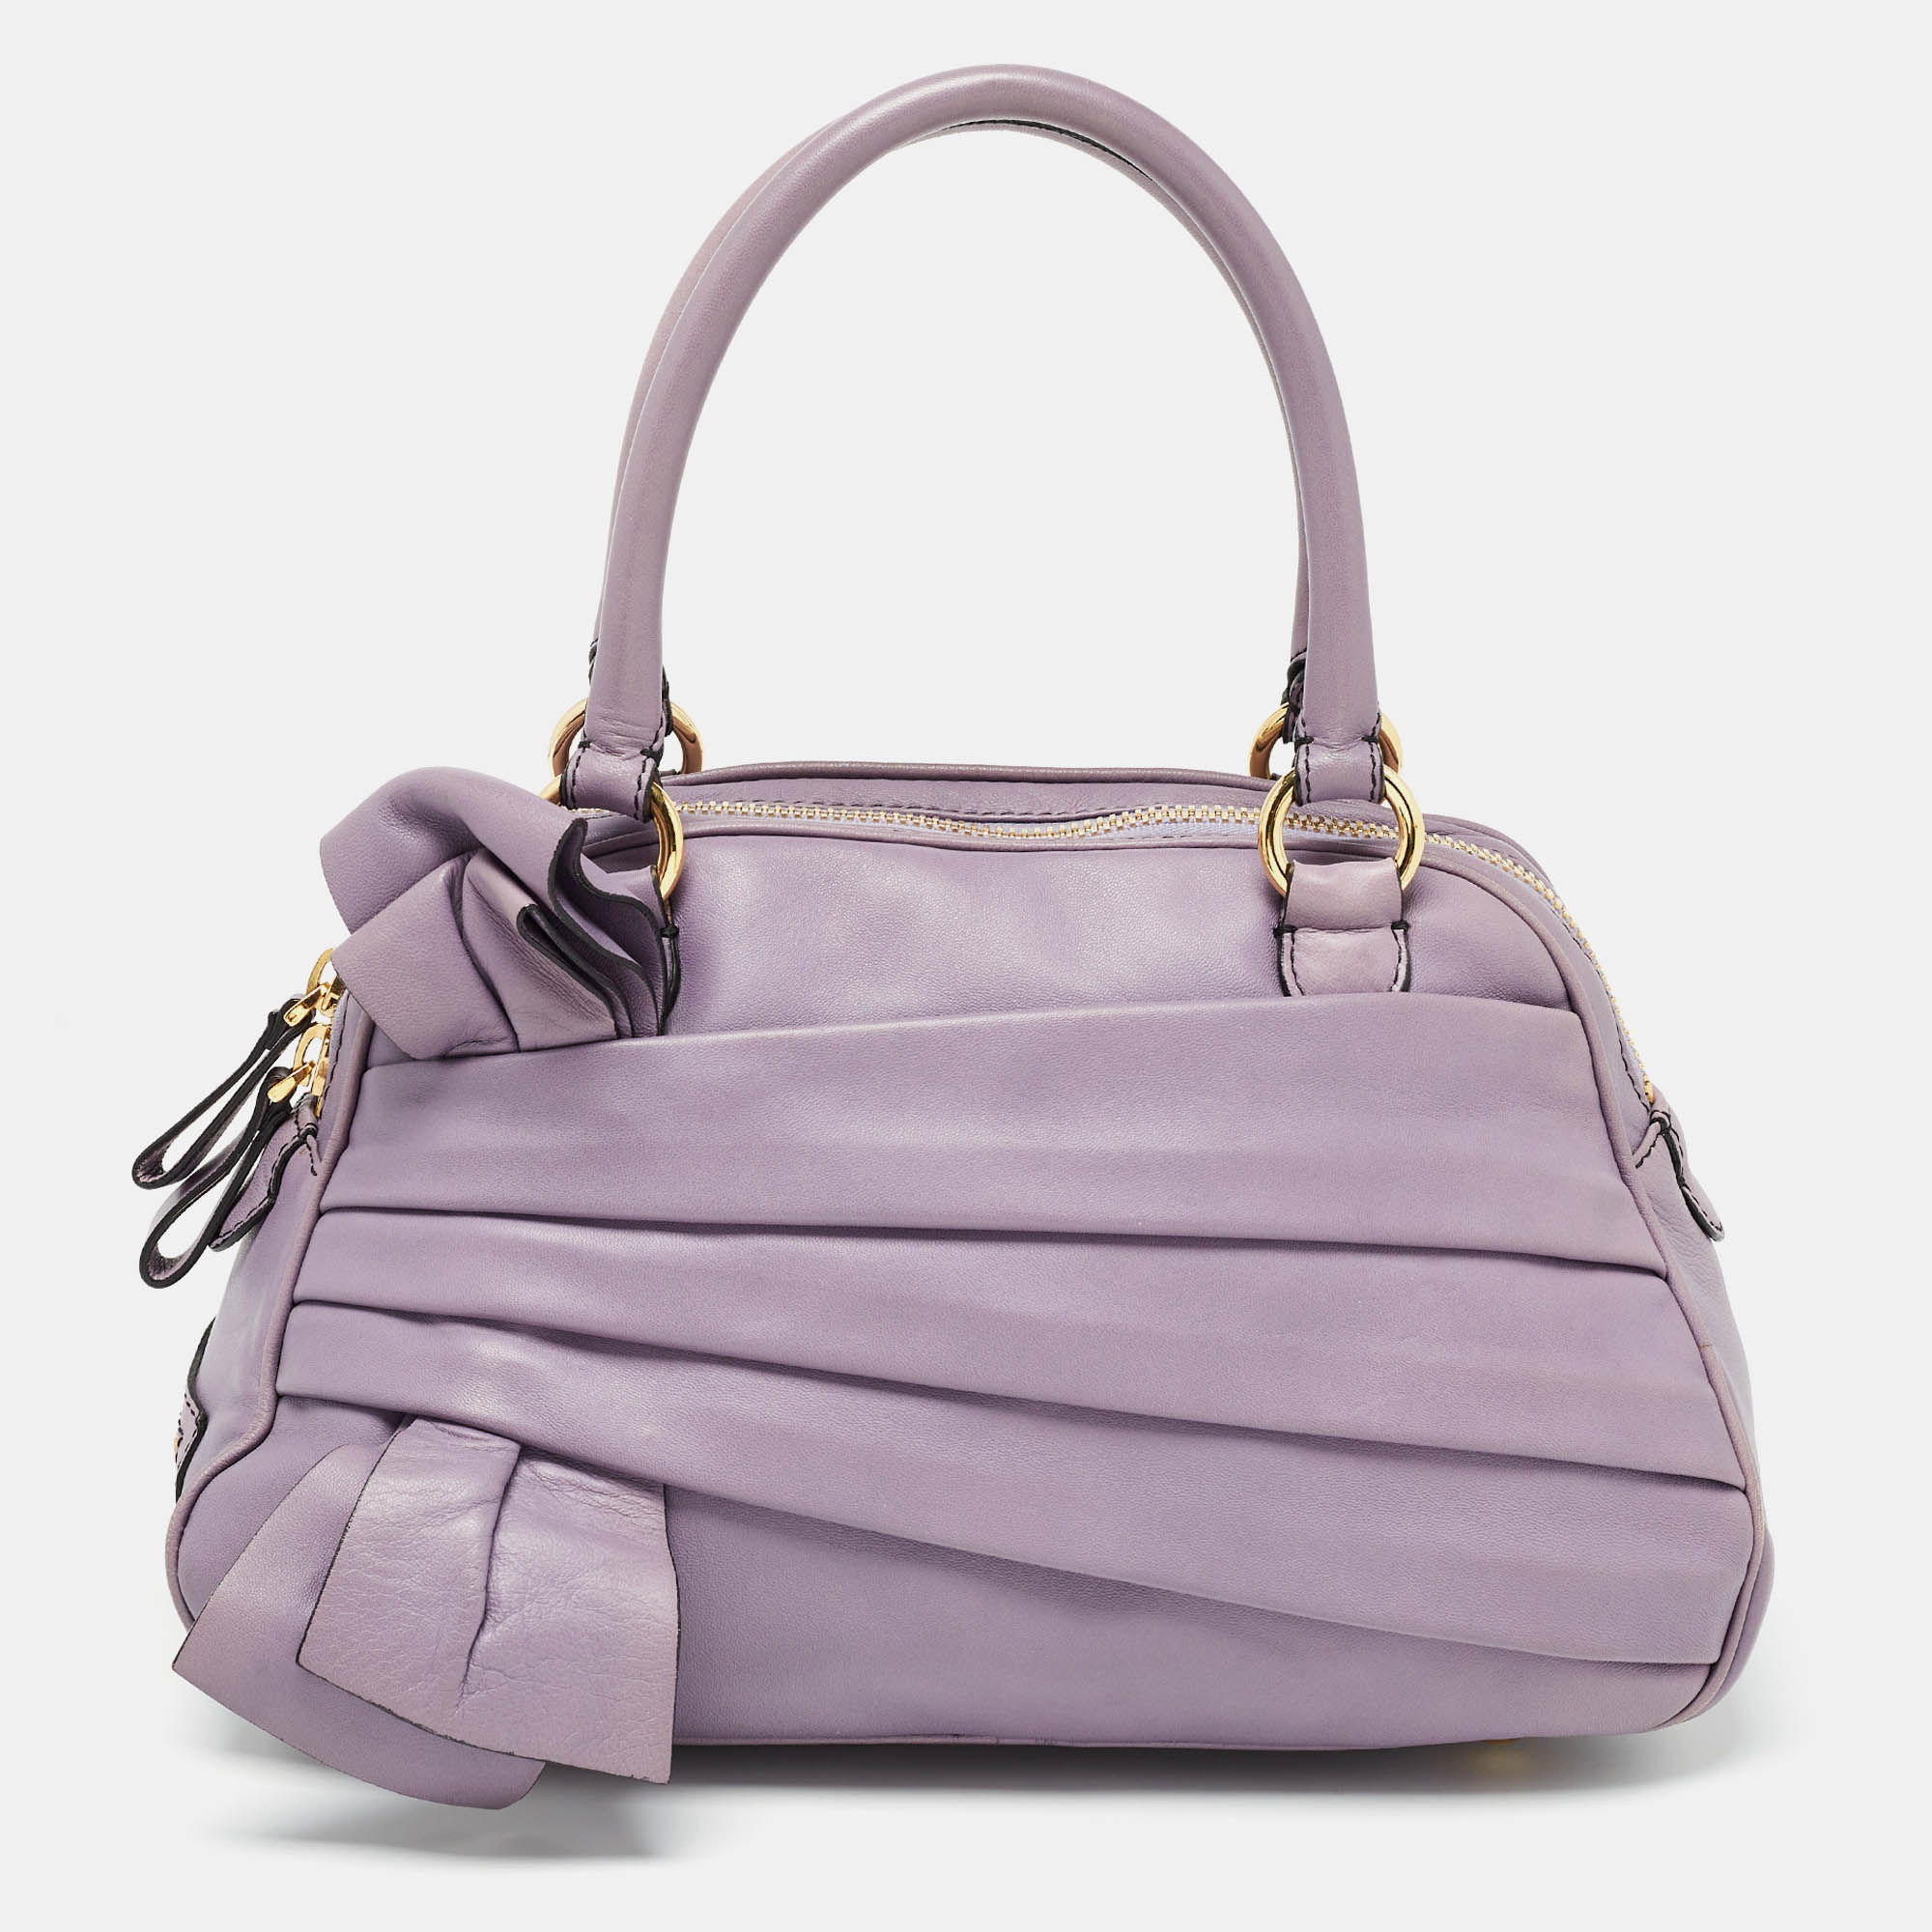 Valentino purple leather bow satchel